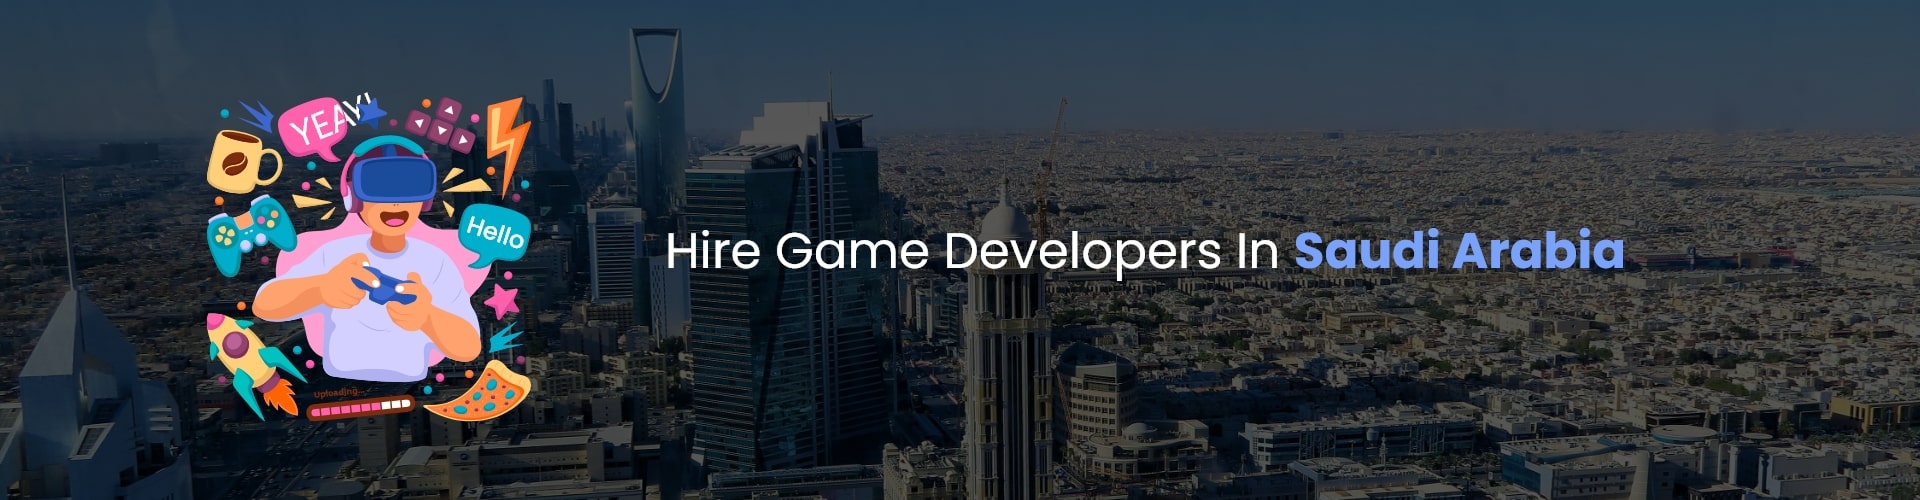 hire game developers in saudi arabia